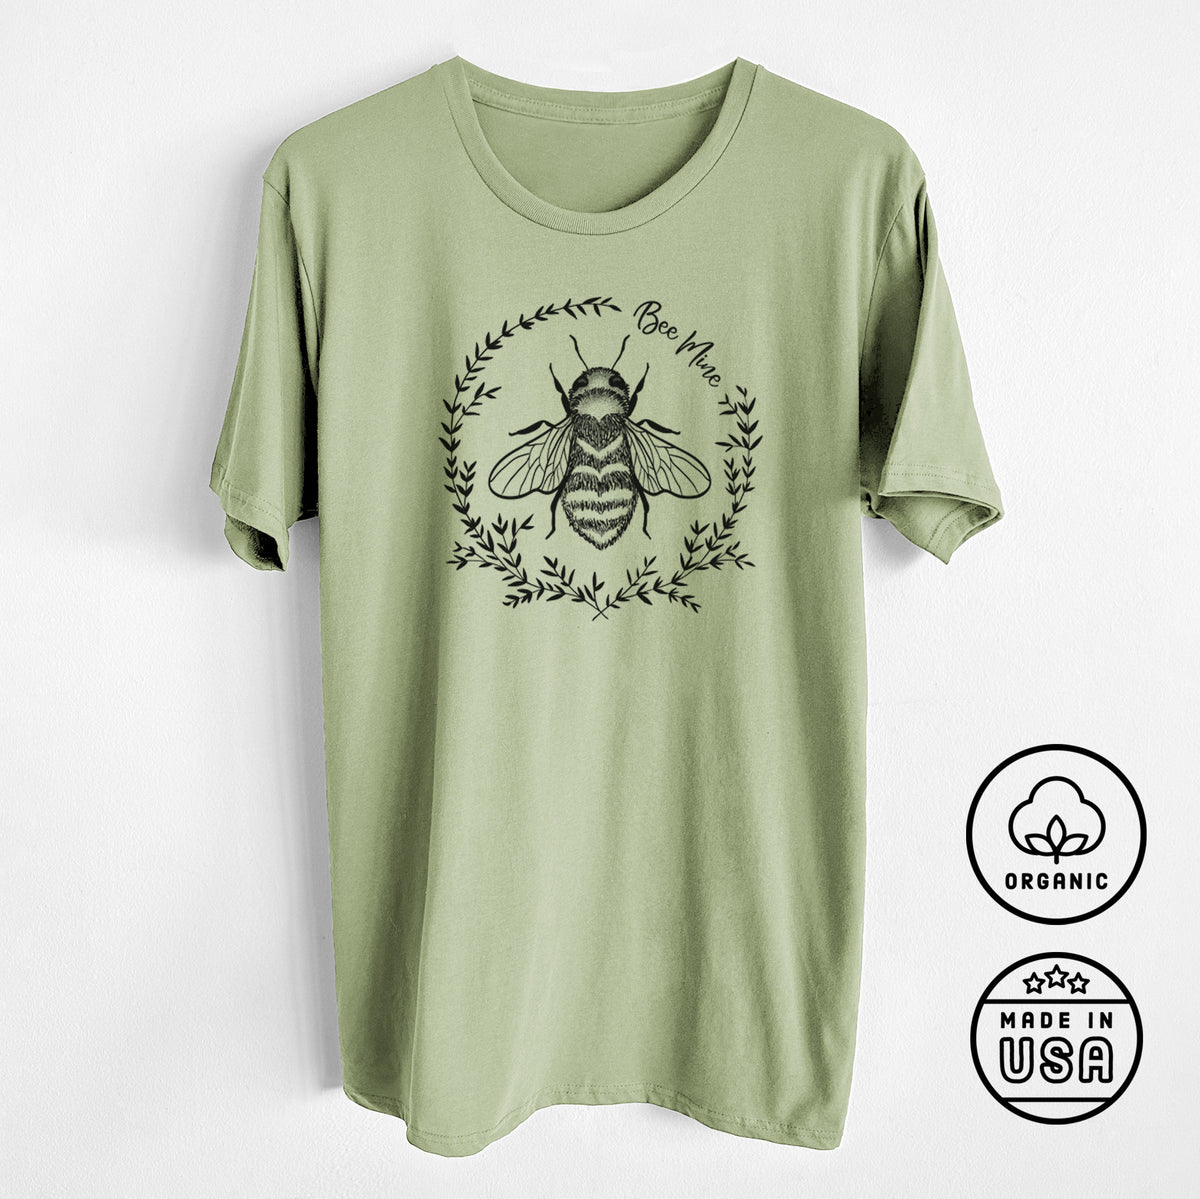 Bee Mine - Unisex Crewneck - Made in USA - 100% Organic Cotton